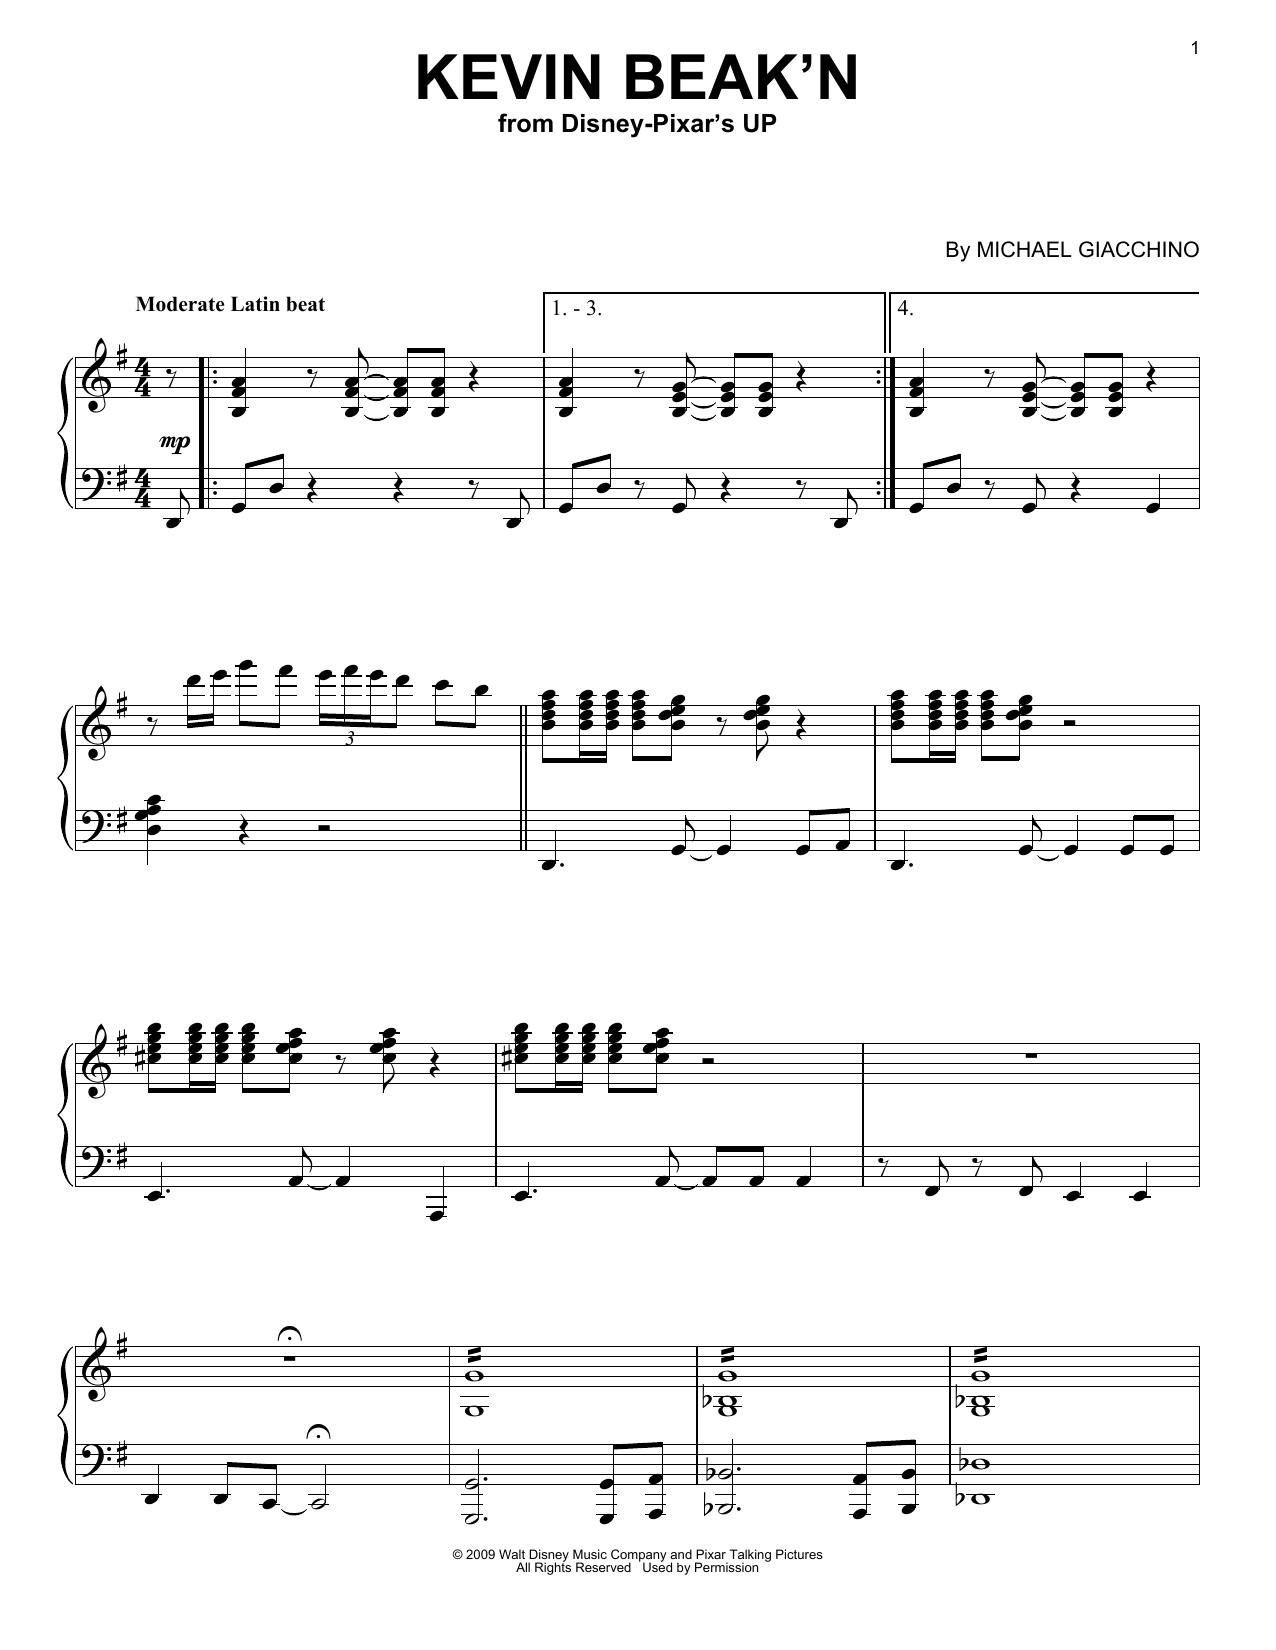 Michael Giacchino Kevin Beak'n Sheet Music Notes & Chords for Piano - Download or Print PDF